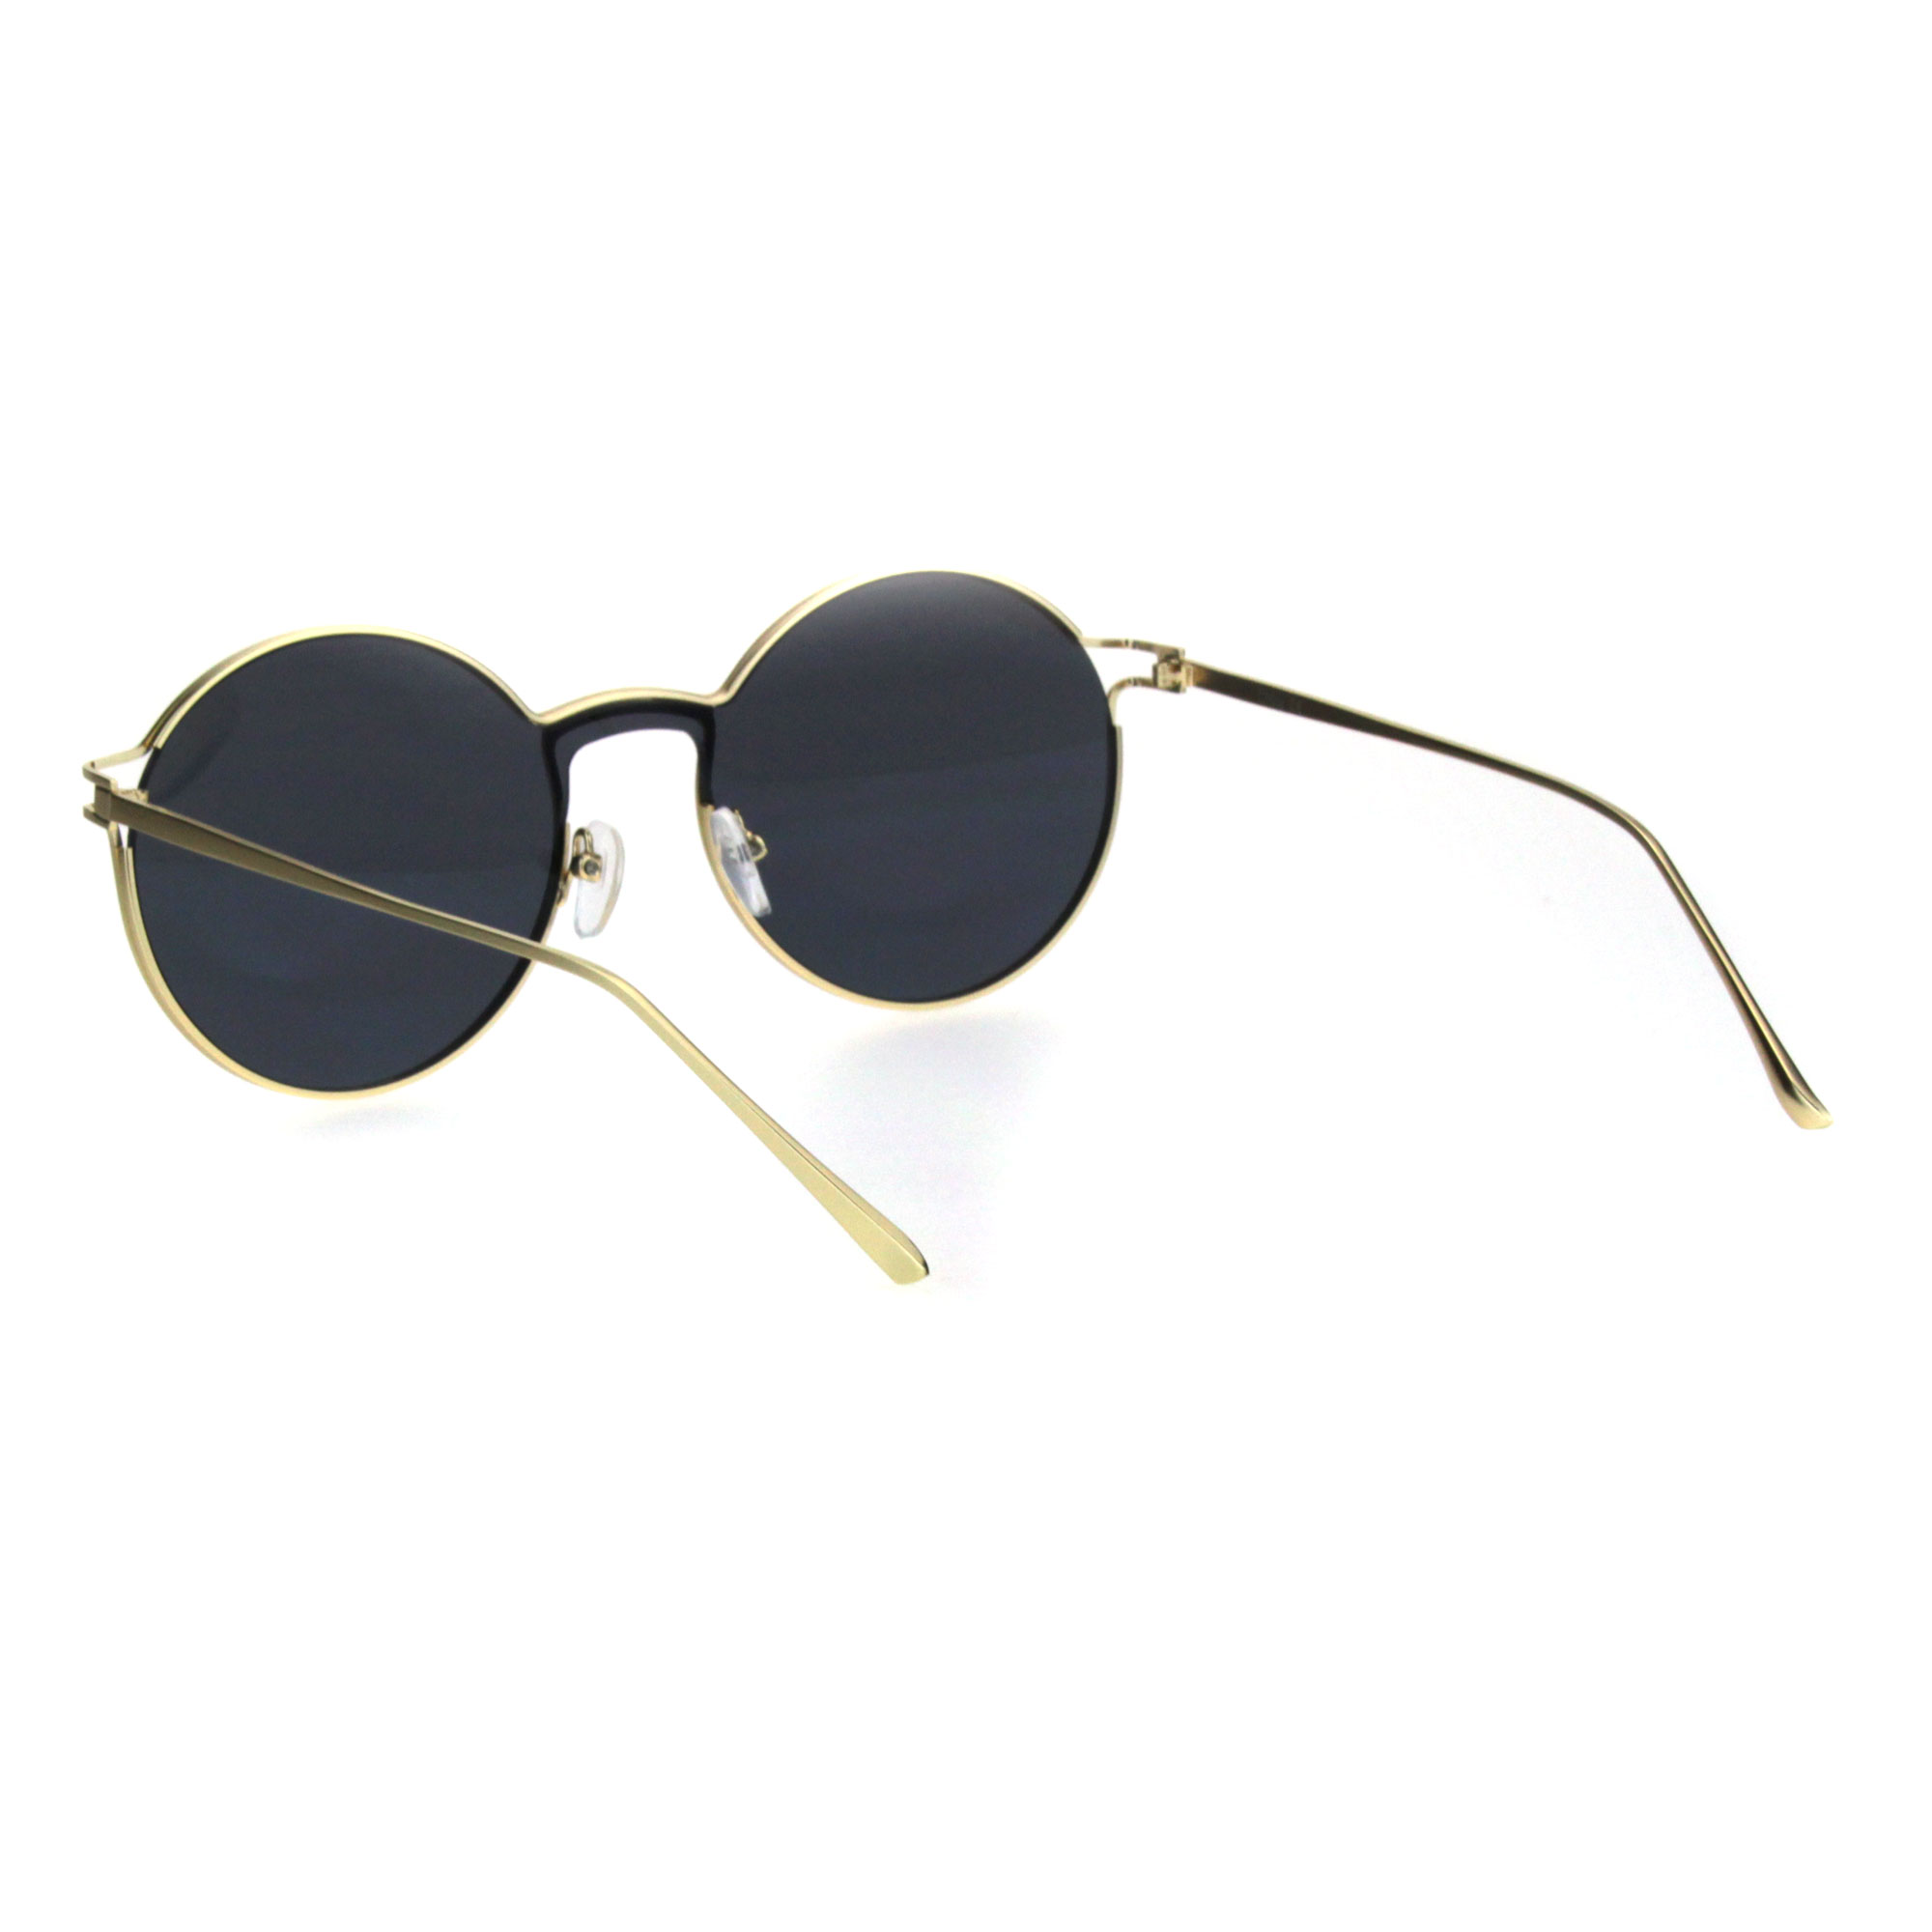 Round Retro Vintage Classic Trendy Hippie Sunglasses Gold Black - image 4 of 4